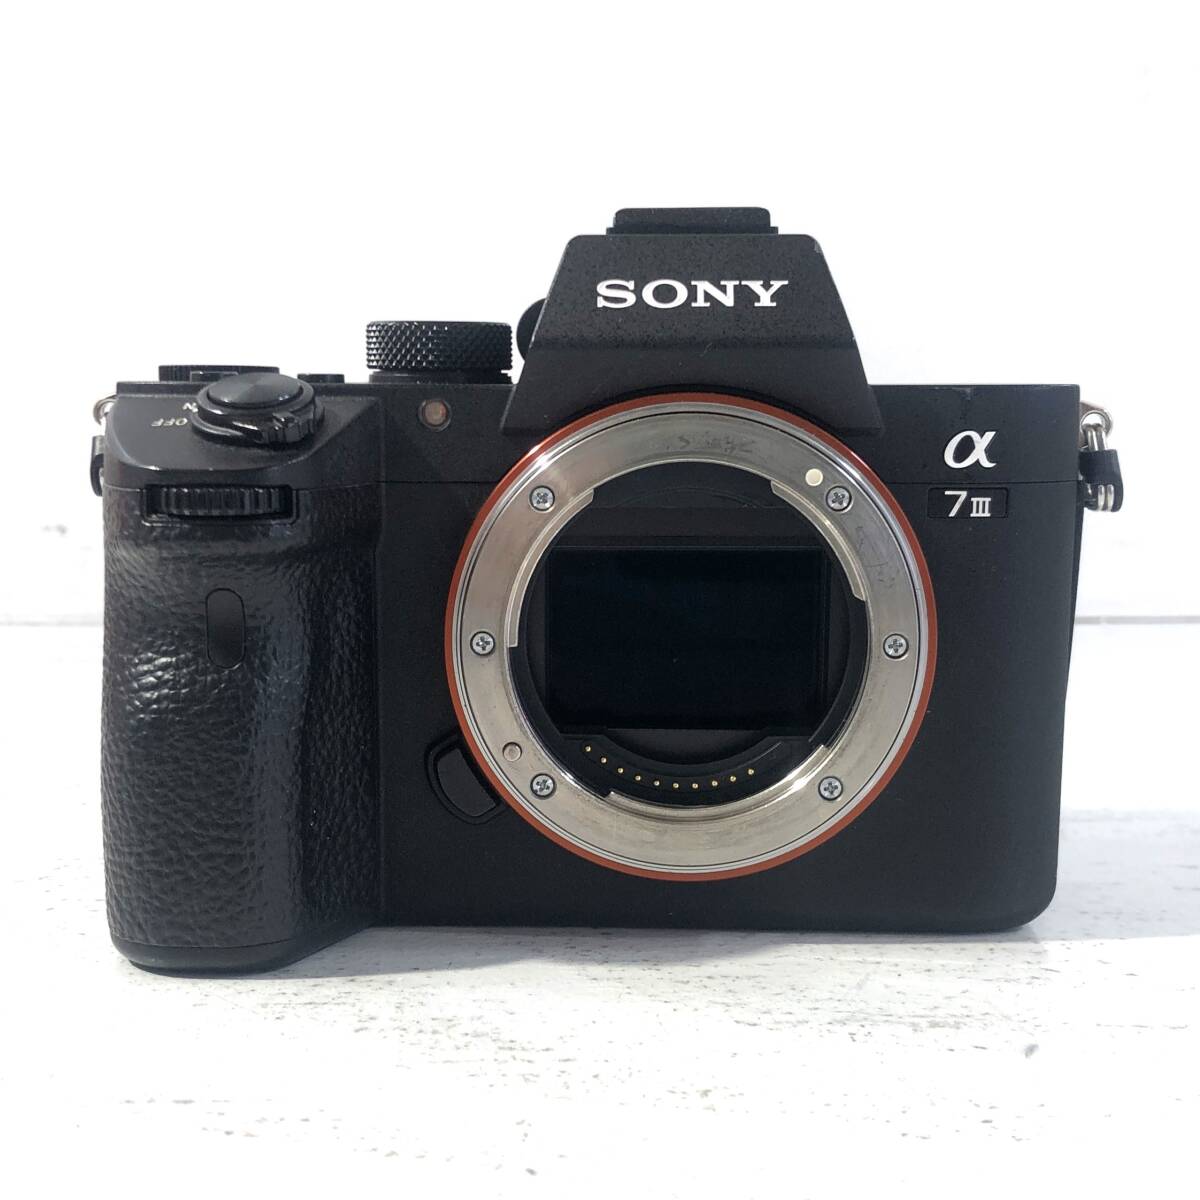 [ б/у /60]SONY α7Ⅲ камера ILCE-7M3 корпус прекрасный товар 2018 год производства 